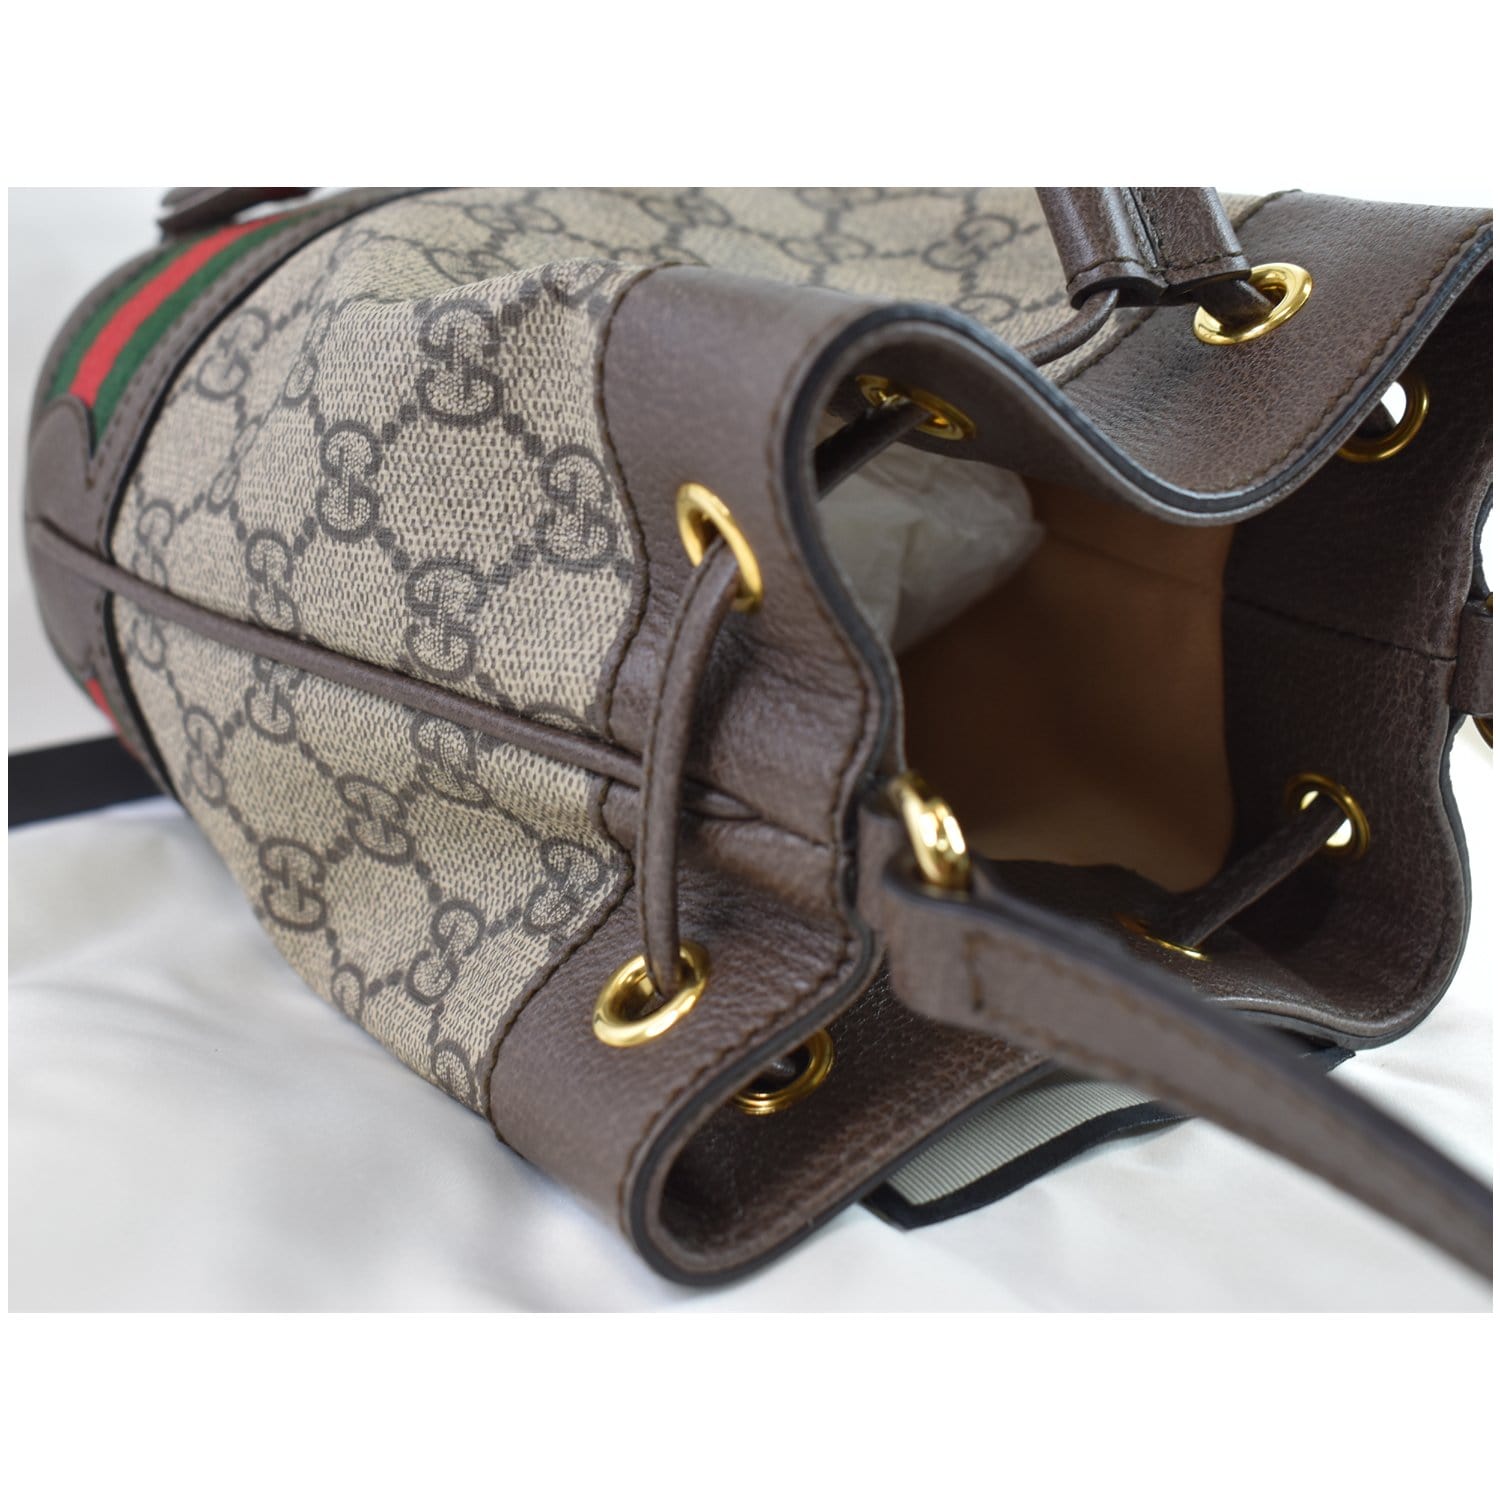 Gucci Ophidia Mini Bag Beige/Ebony